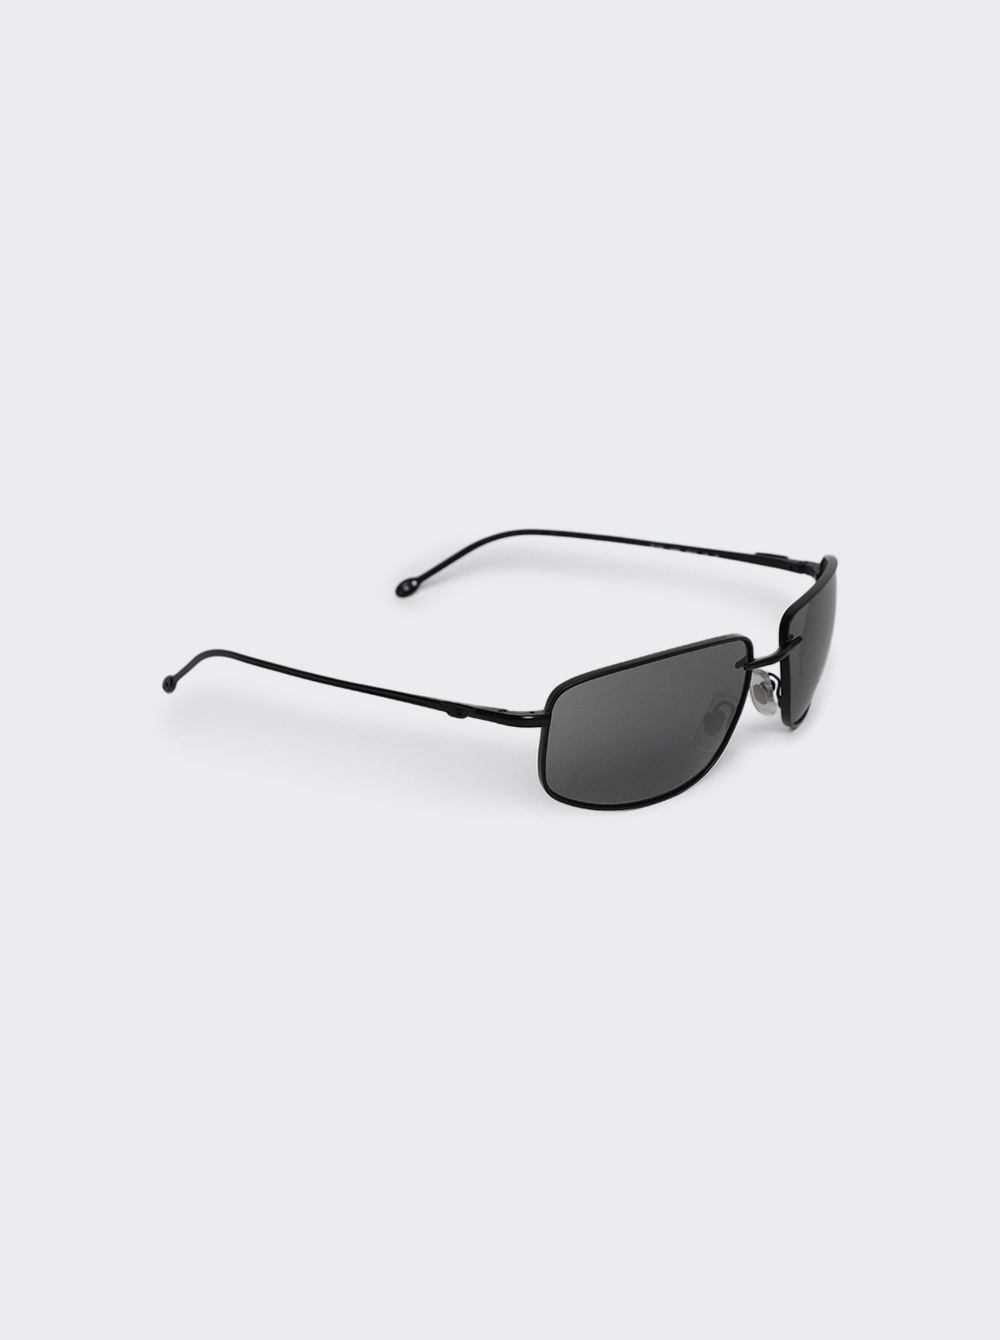 Lx1005 Sunglasses Matte Black - 4